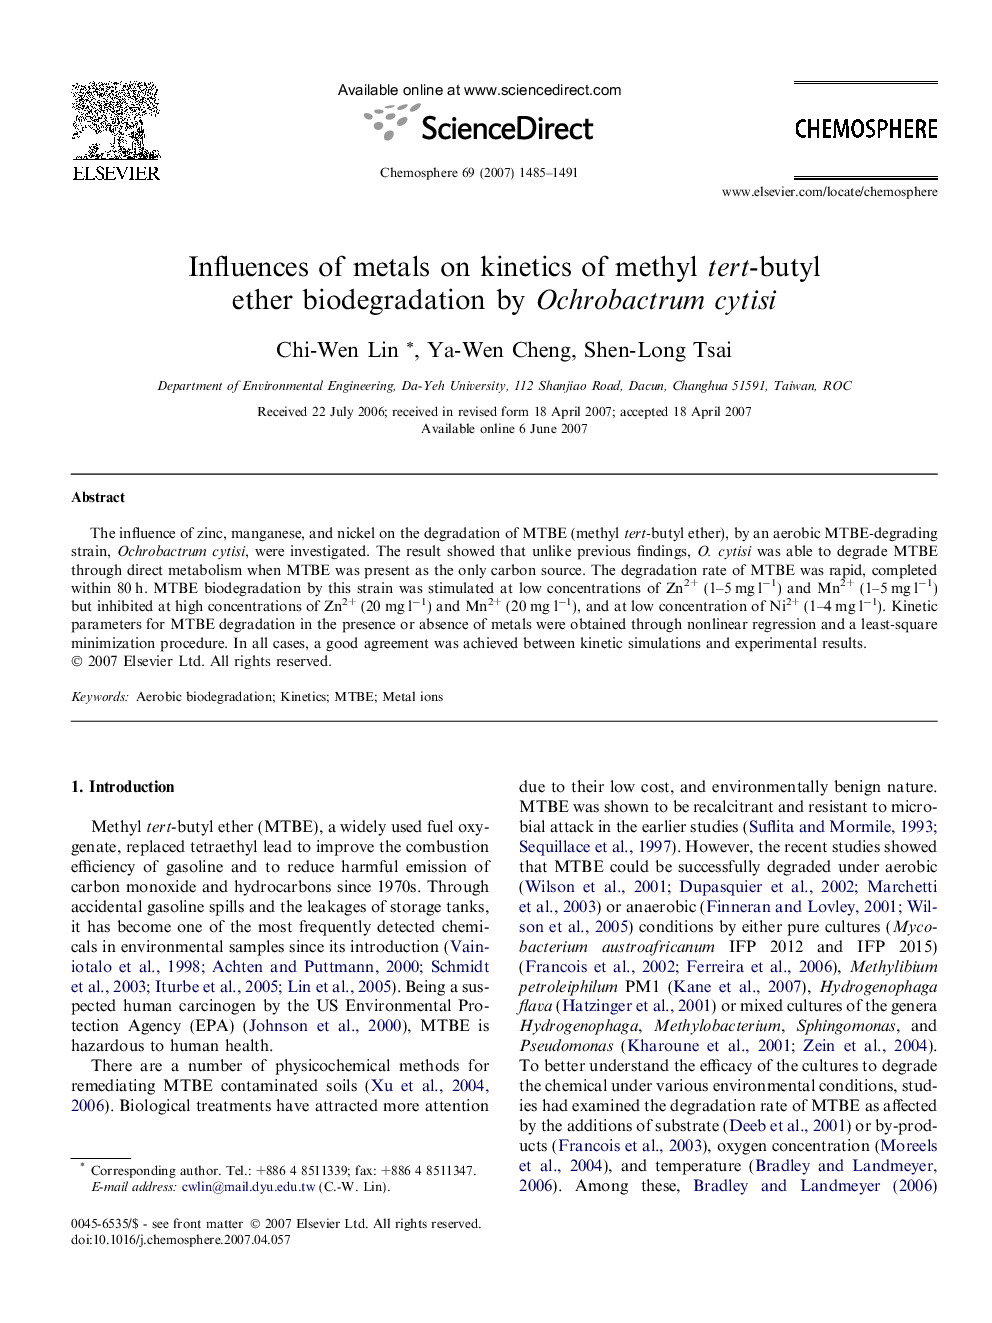 Influences of metals on kinetics of methyl tert-butyl ether biodegradation by Ochrobactrum cytisi